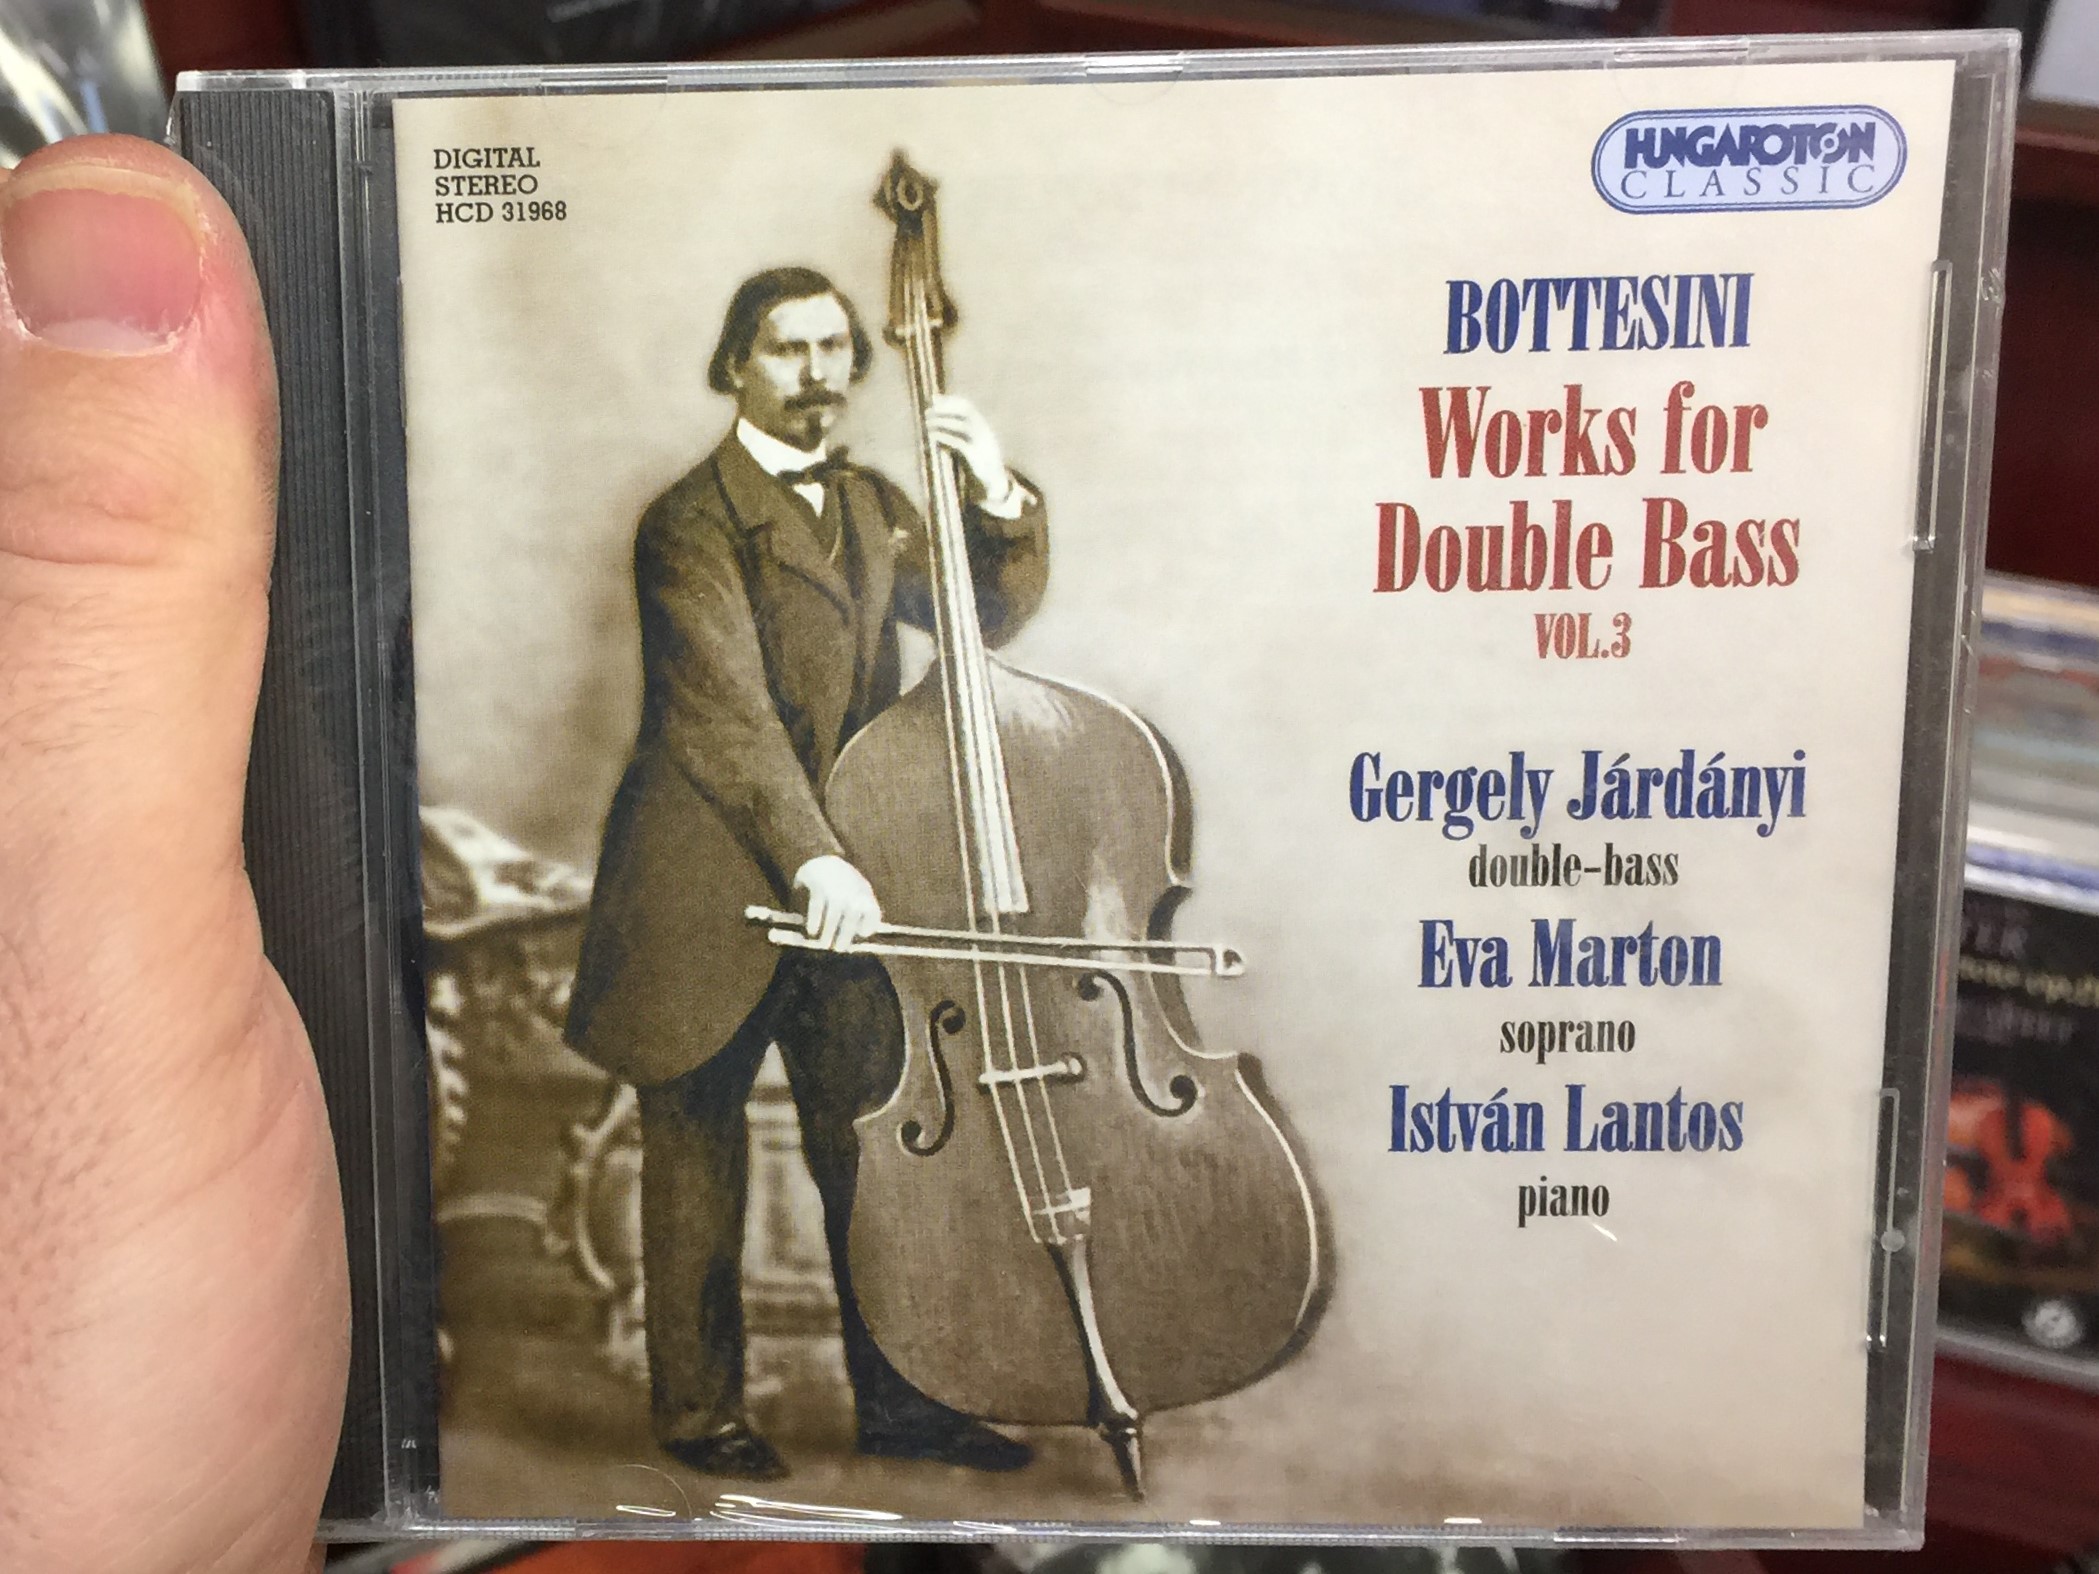 bottesini-works-for-double-bass-vol.-3-gergely-jardanyi-double-bass-eva-marton-soprano-istvan-lantos-piano-hungaroton-classic-audio-cd-2002-stereo-hcd-31968-1-.jpg